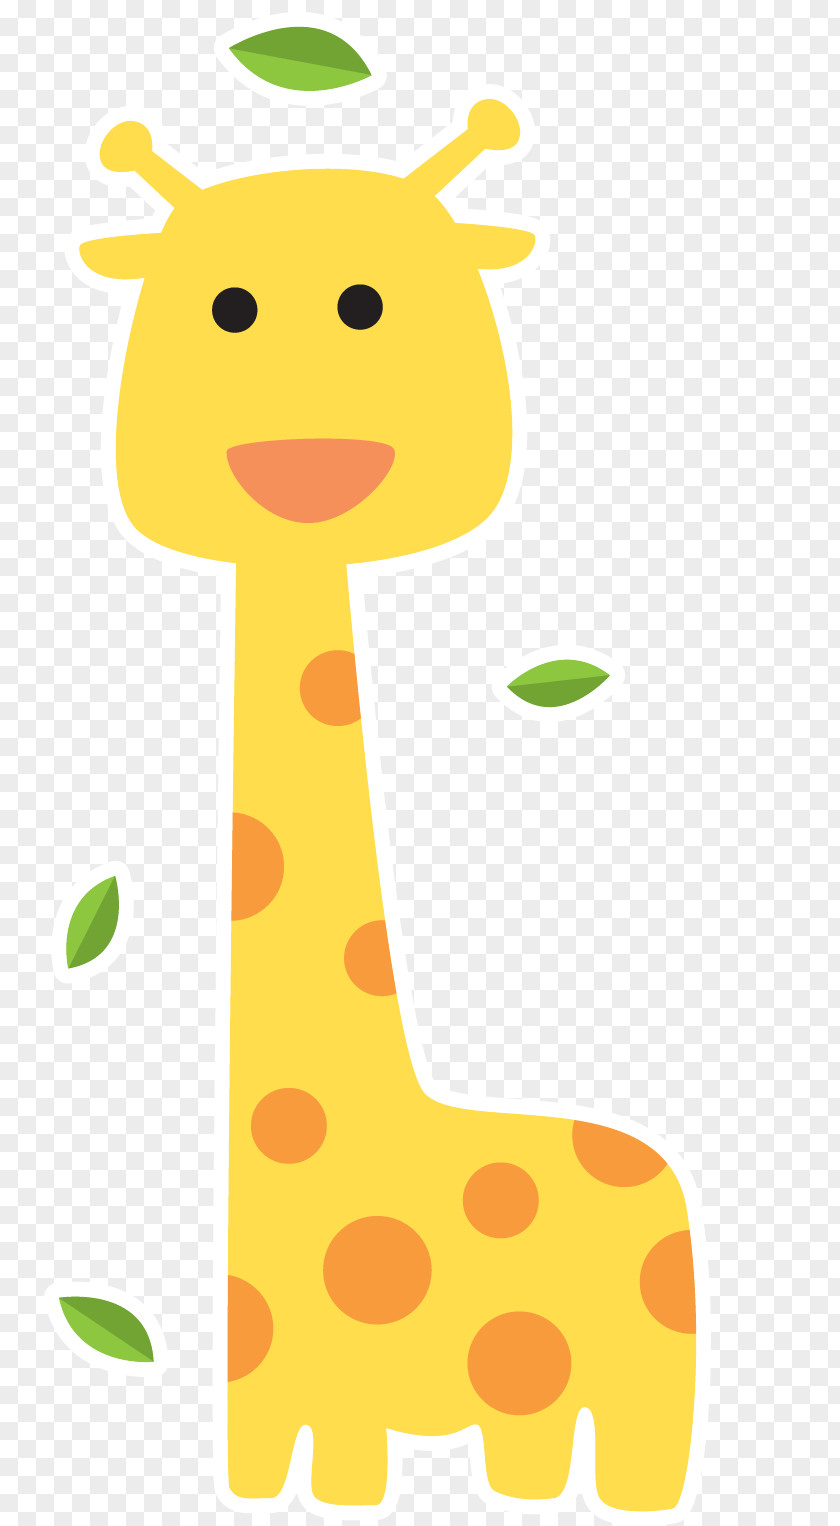 Cartoon Giraffe Northern Yellow Drawing PNG